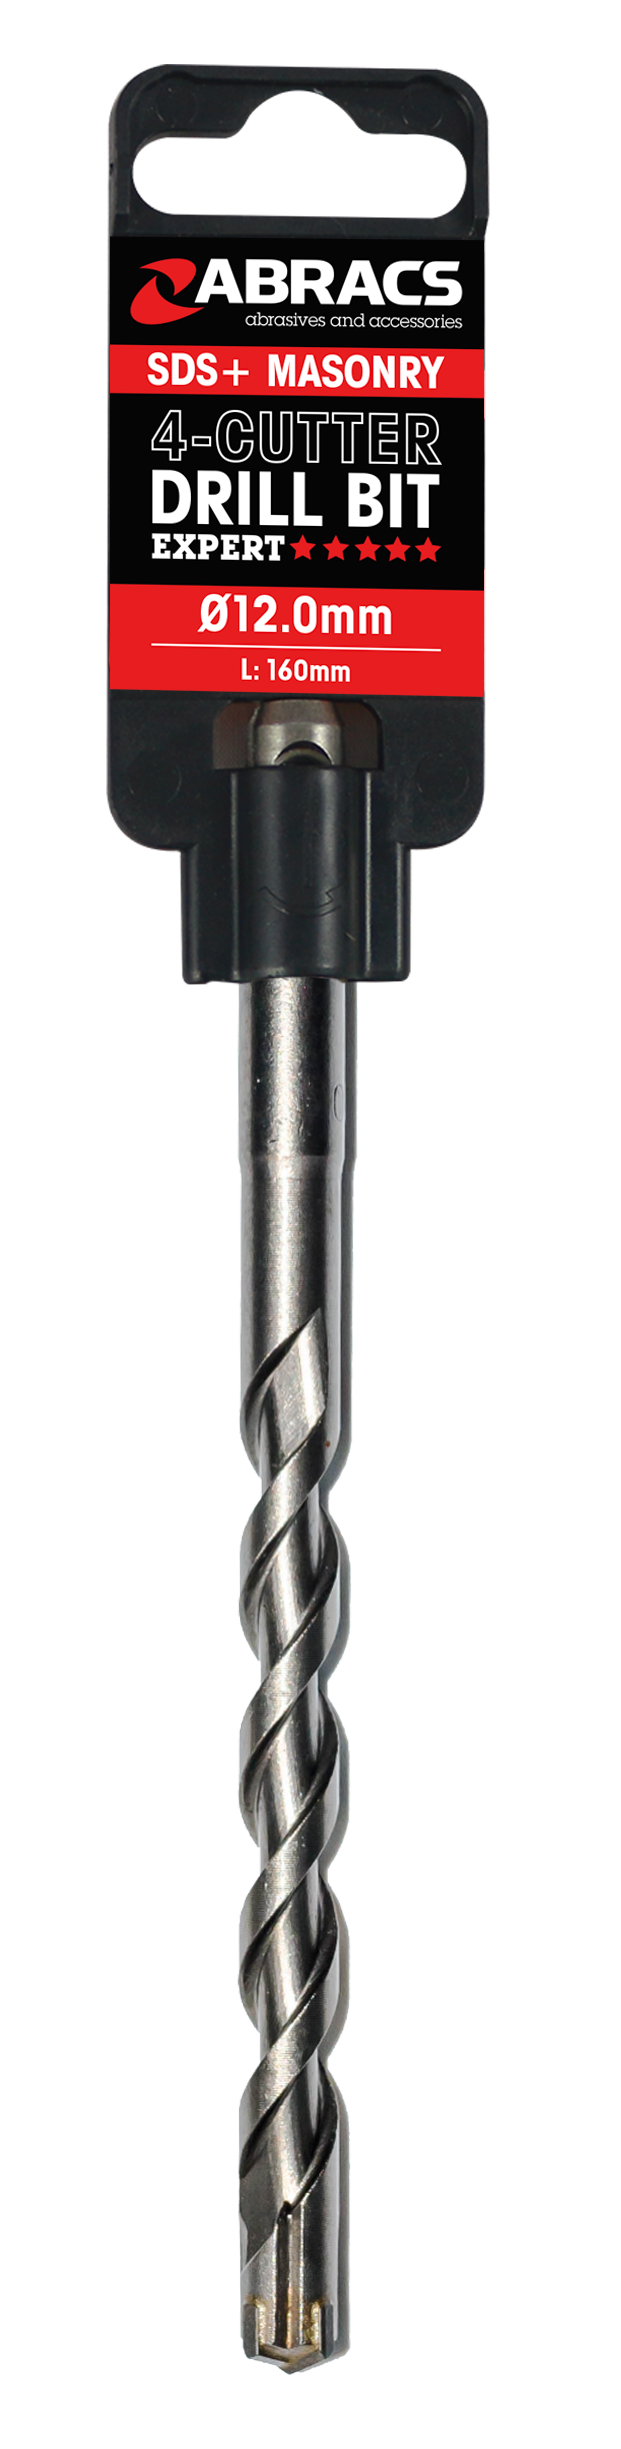 DBCX070160 7.0mm x 160mm SDS+ Masonry Drill Bit - 4 Cutter